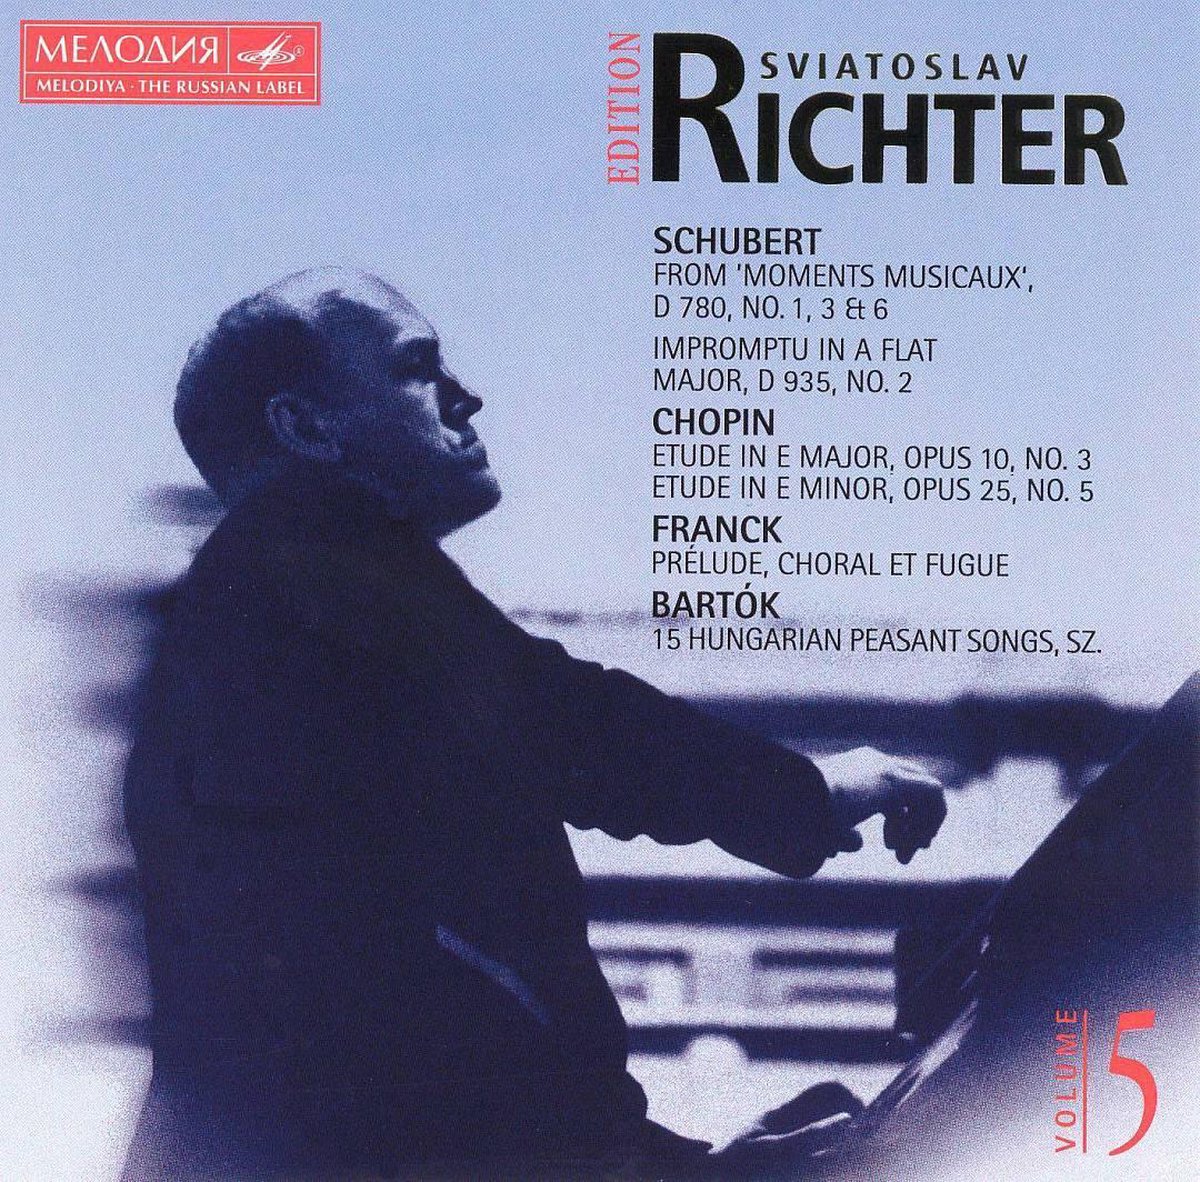 Schubert: Moments Musical; Chopin: Etudes; Bartok: Hungarian Peasant Songs - Sviatoslav Richter